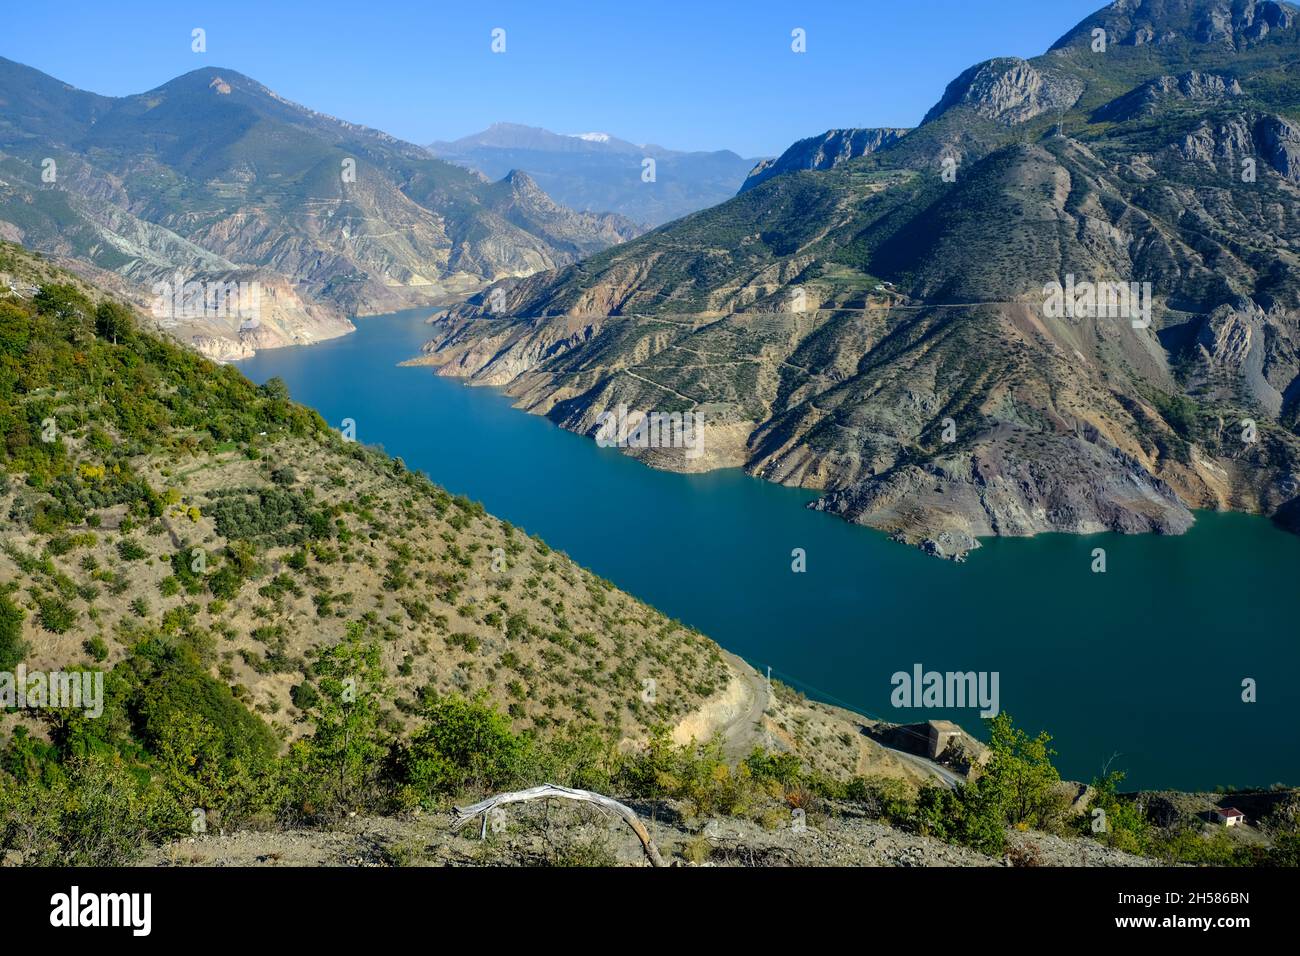 The dam lake of Deriner dam in Artvin province. Stock Photo